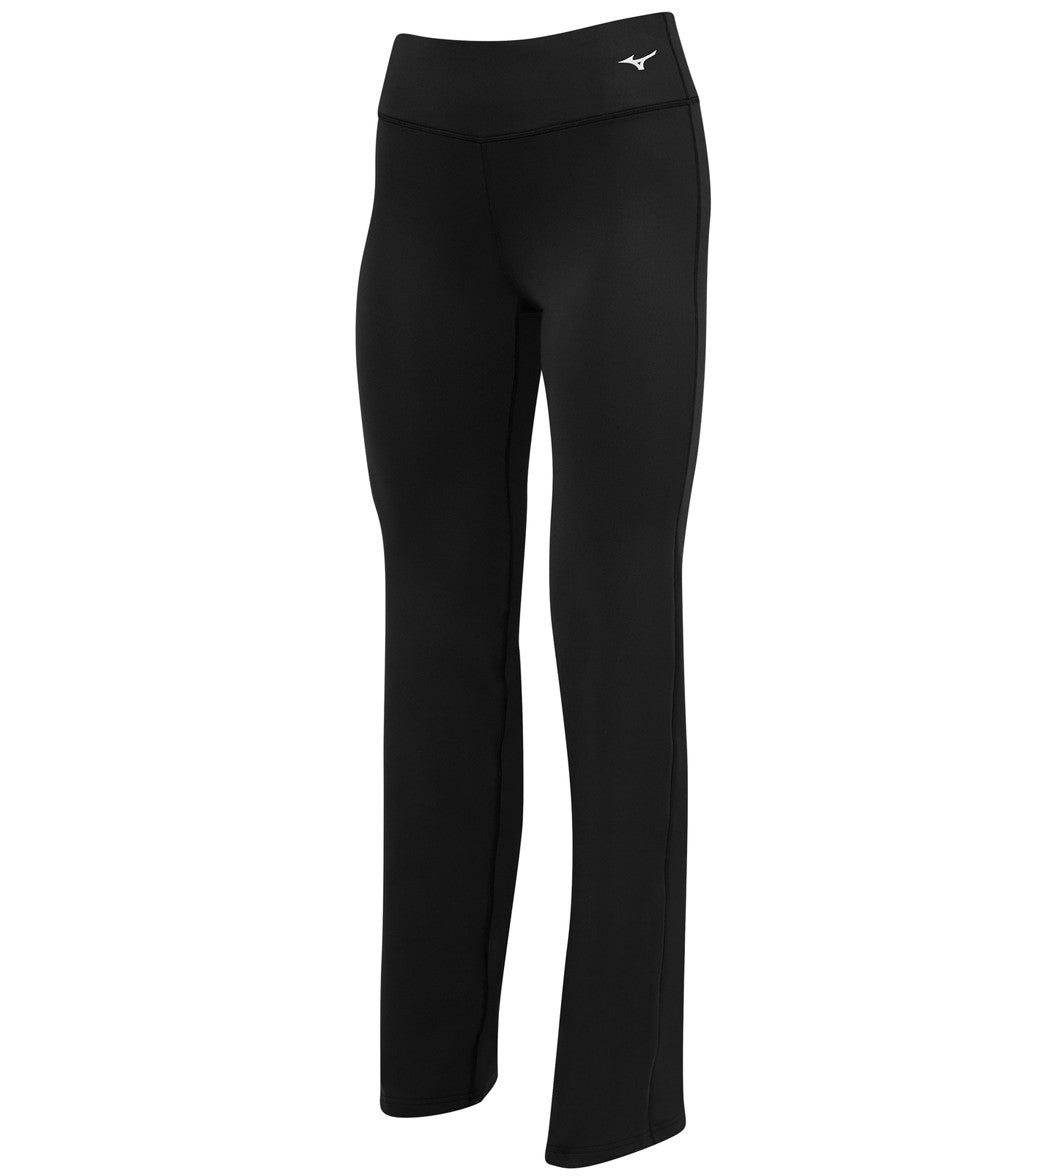 Mizuno Women's Align Volleyball Pants - Black Large - Swimoutlet.com